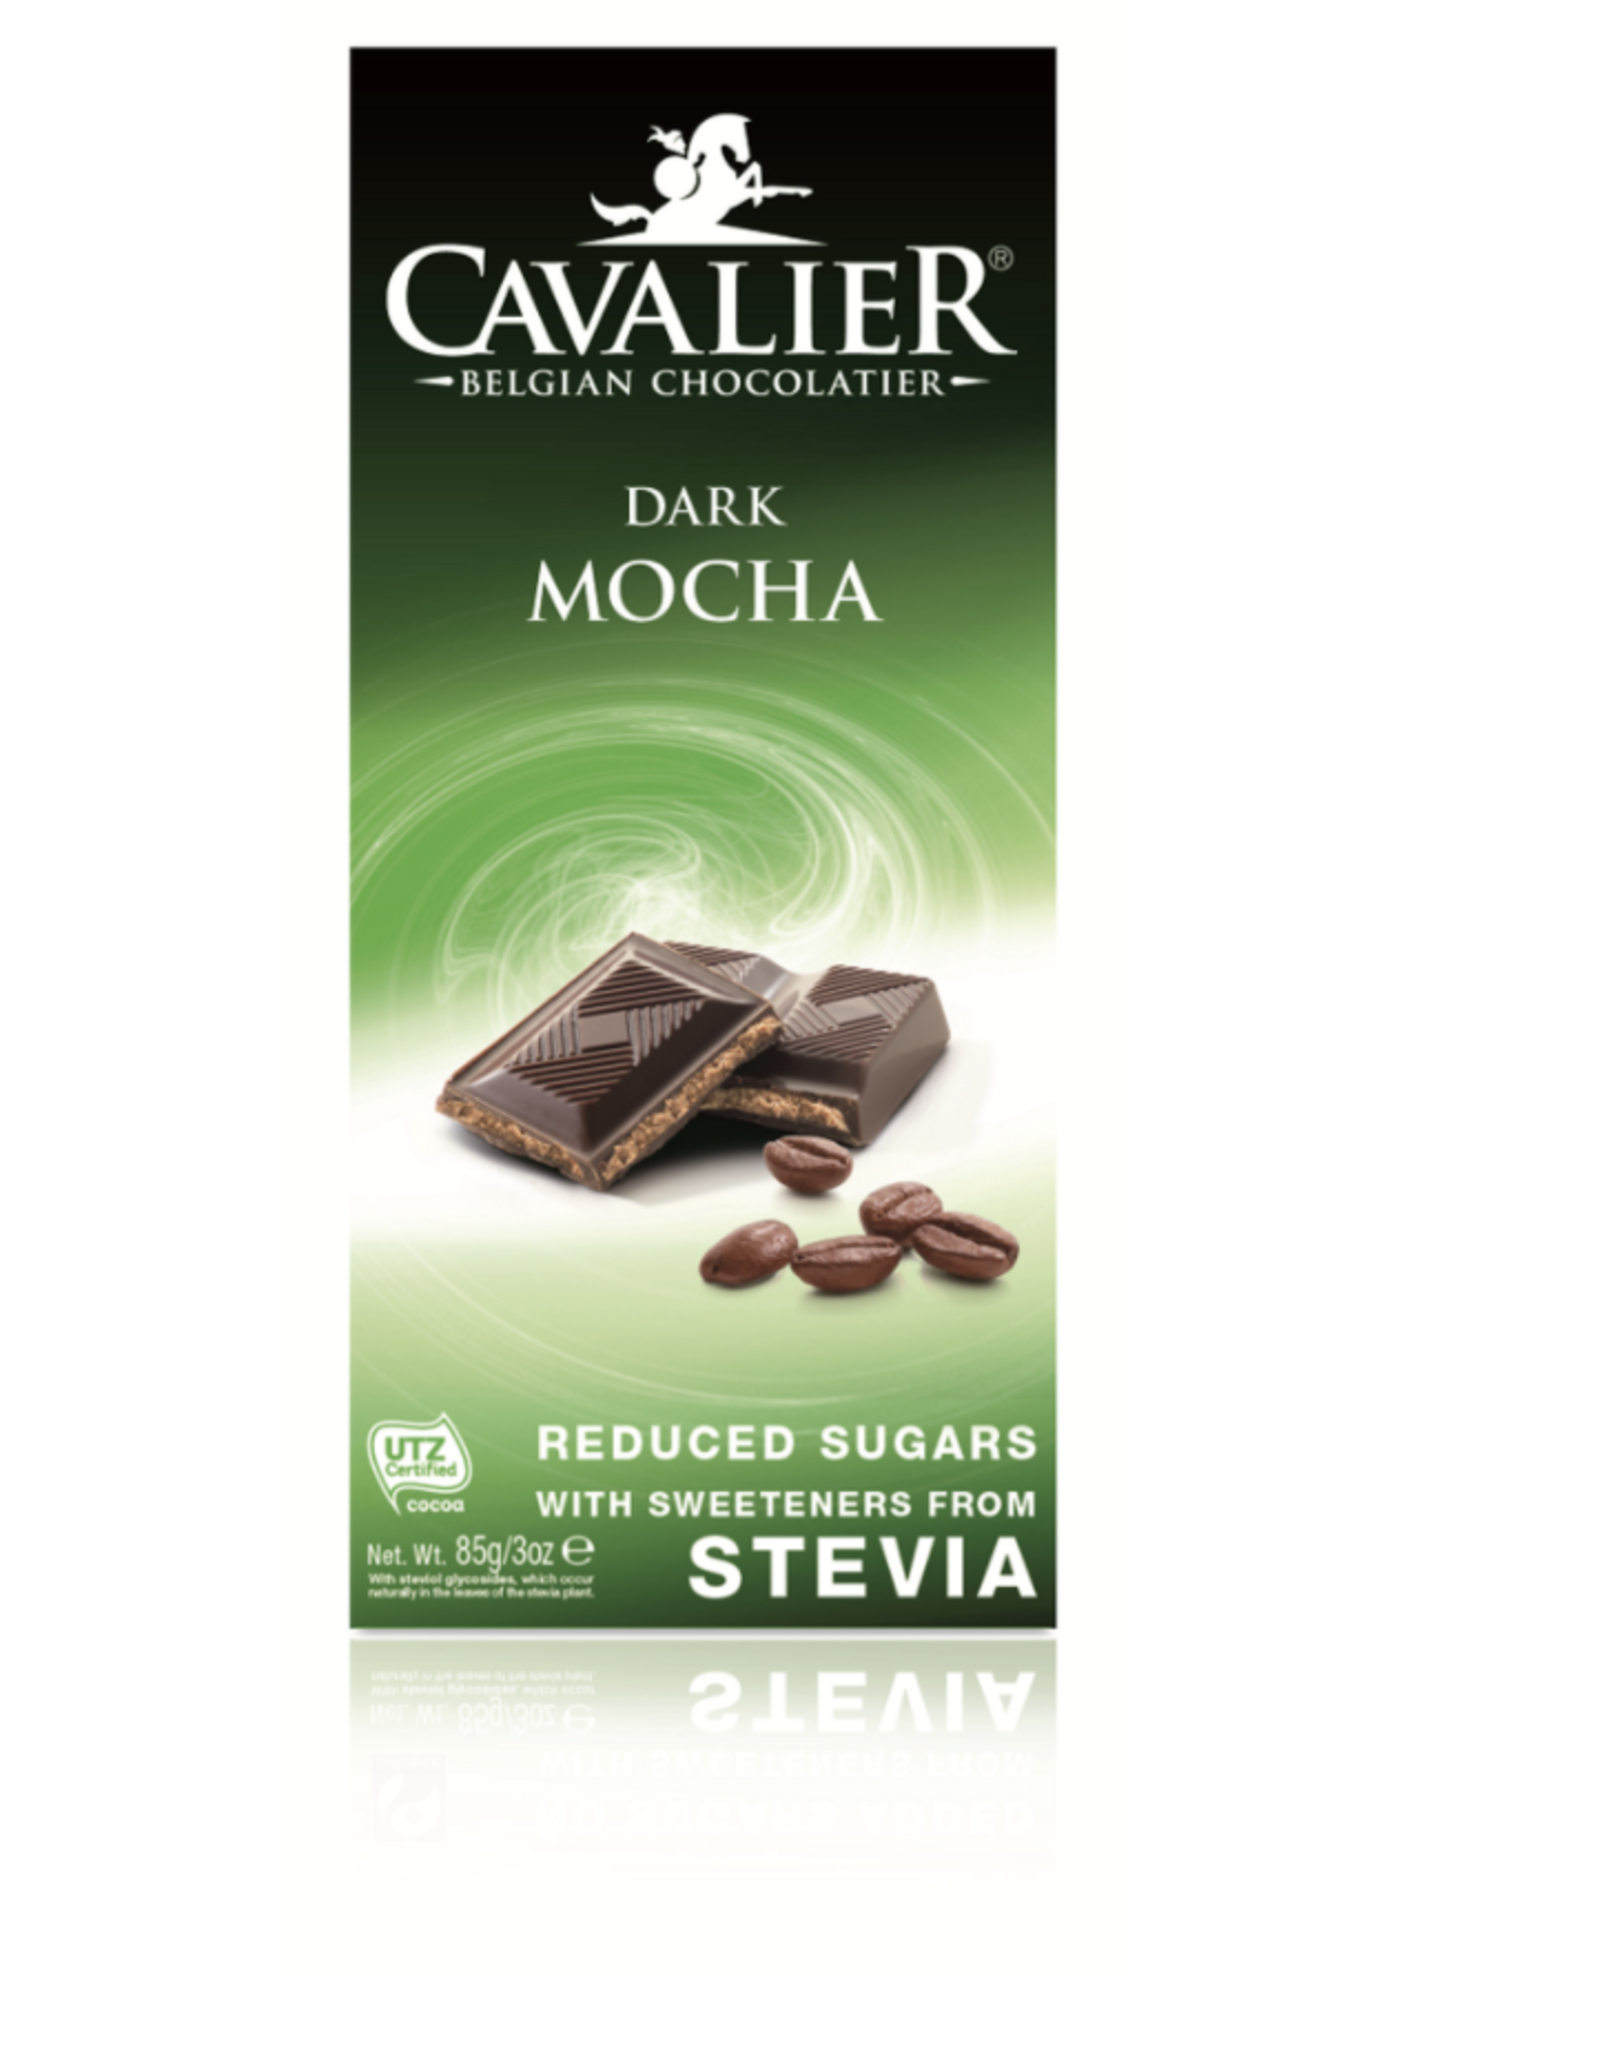 Cavalier Dark Mocha Choc Bar